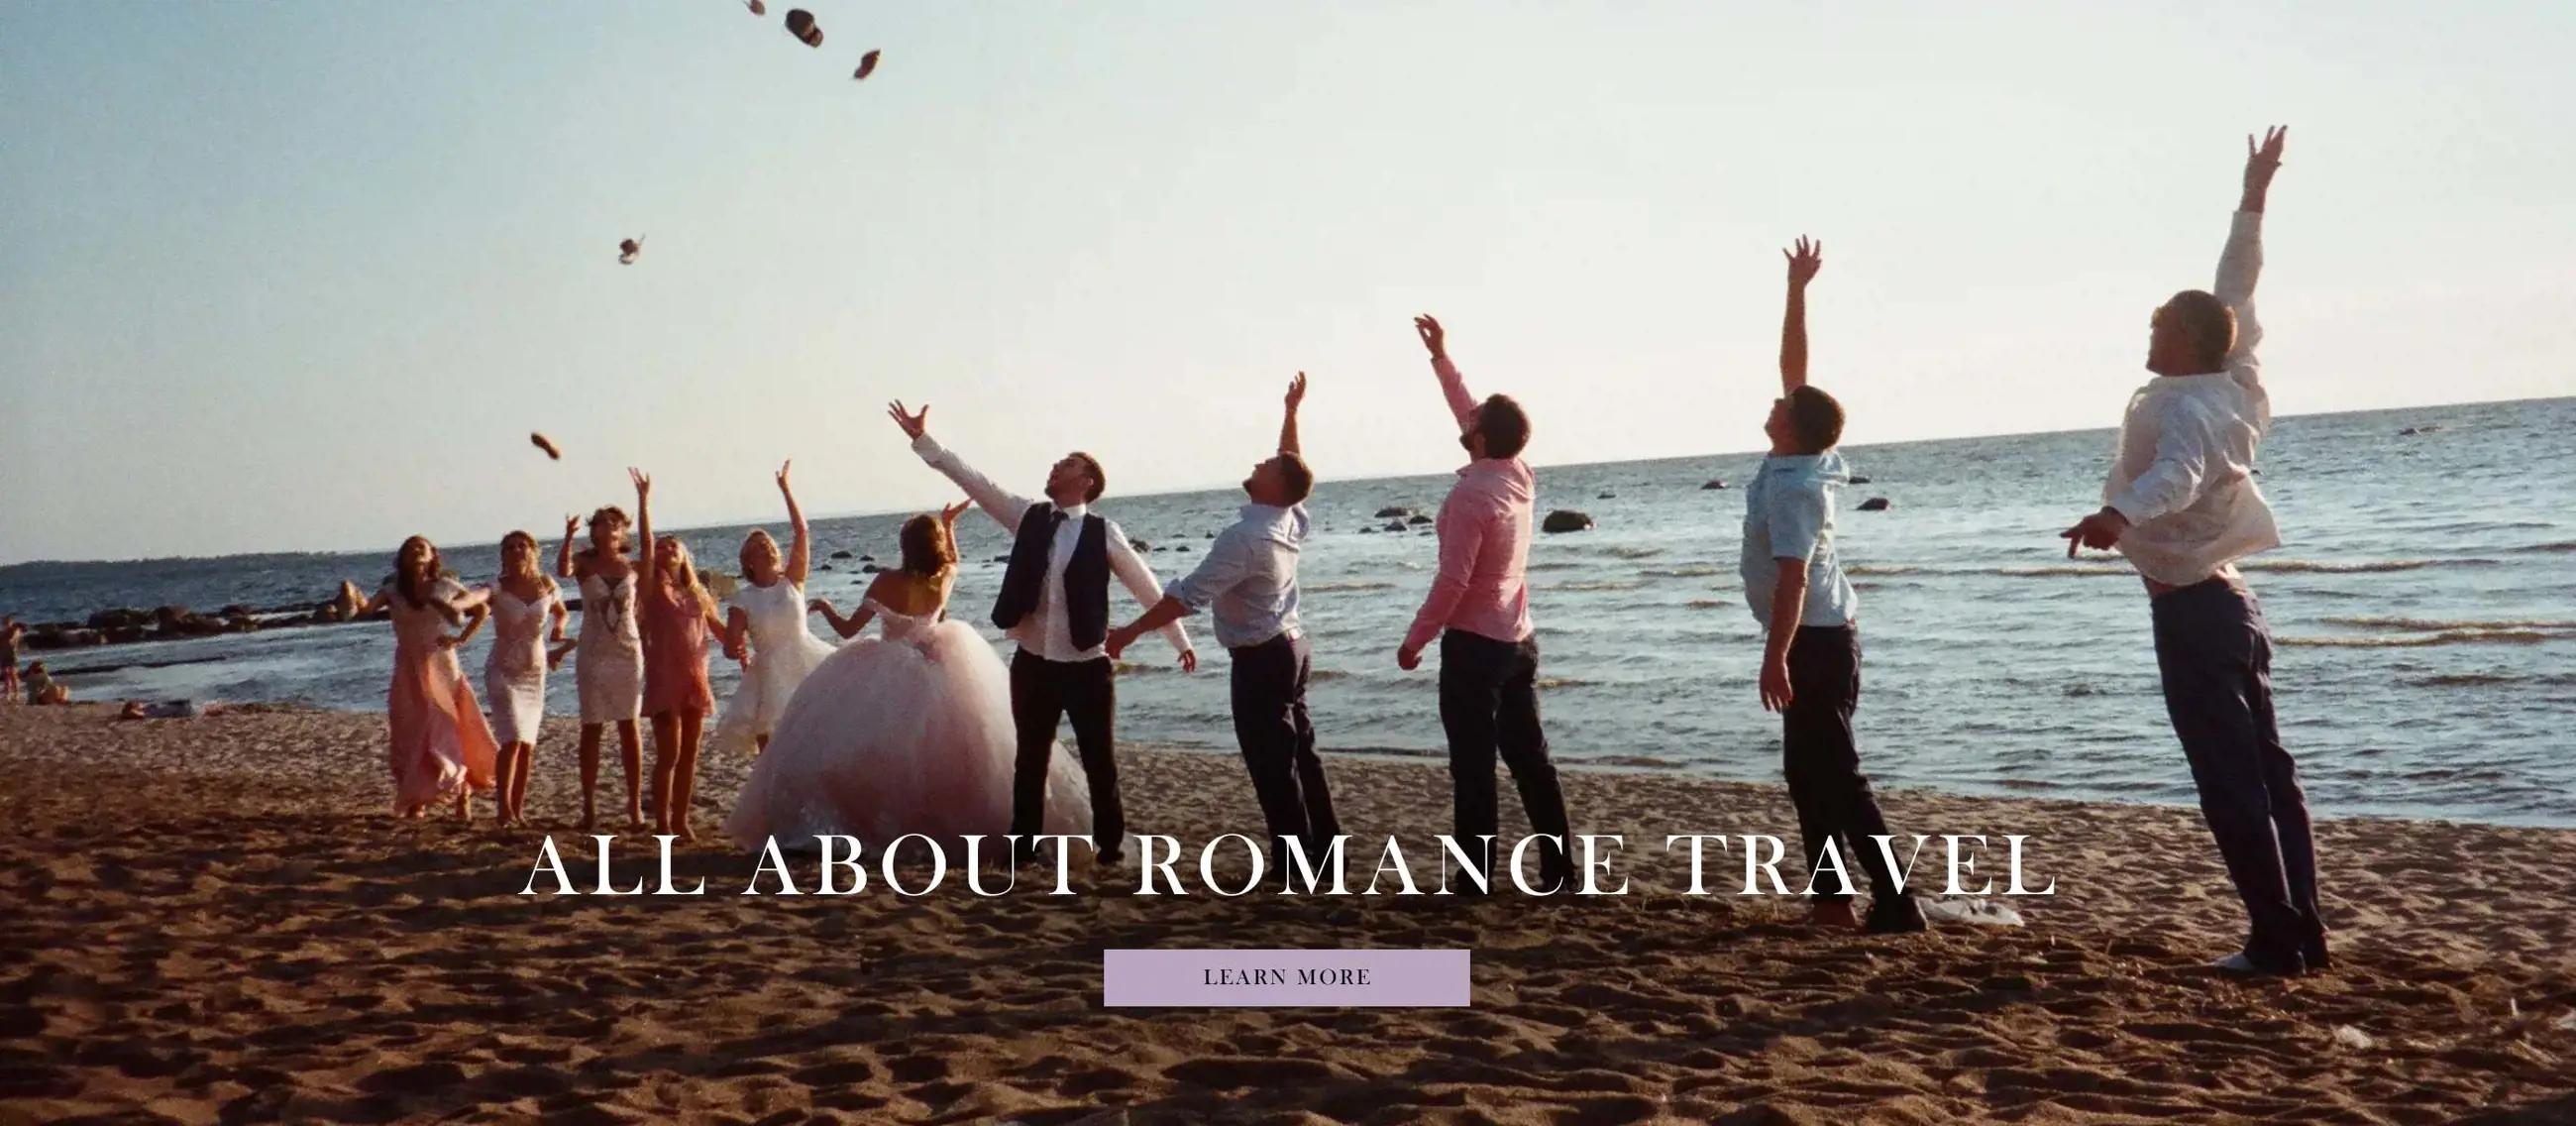 Romance Travel Desktop